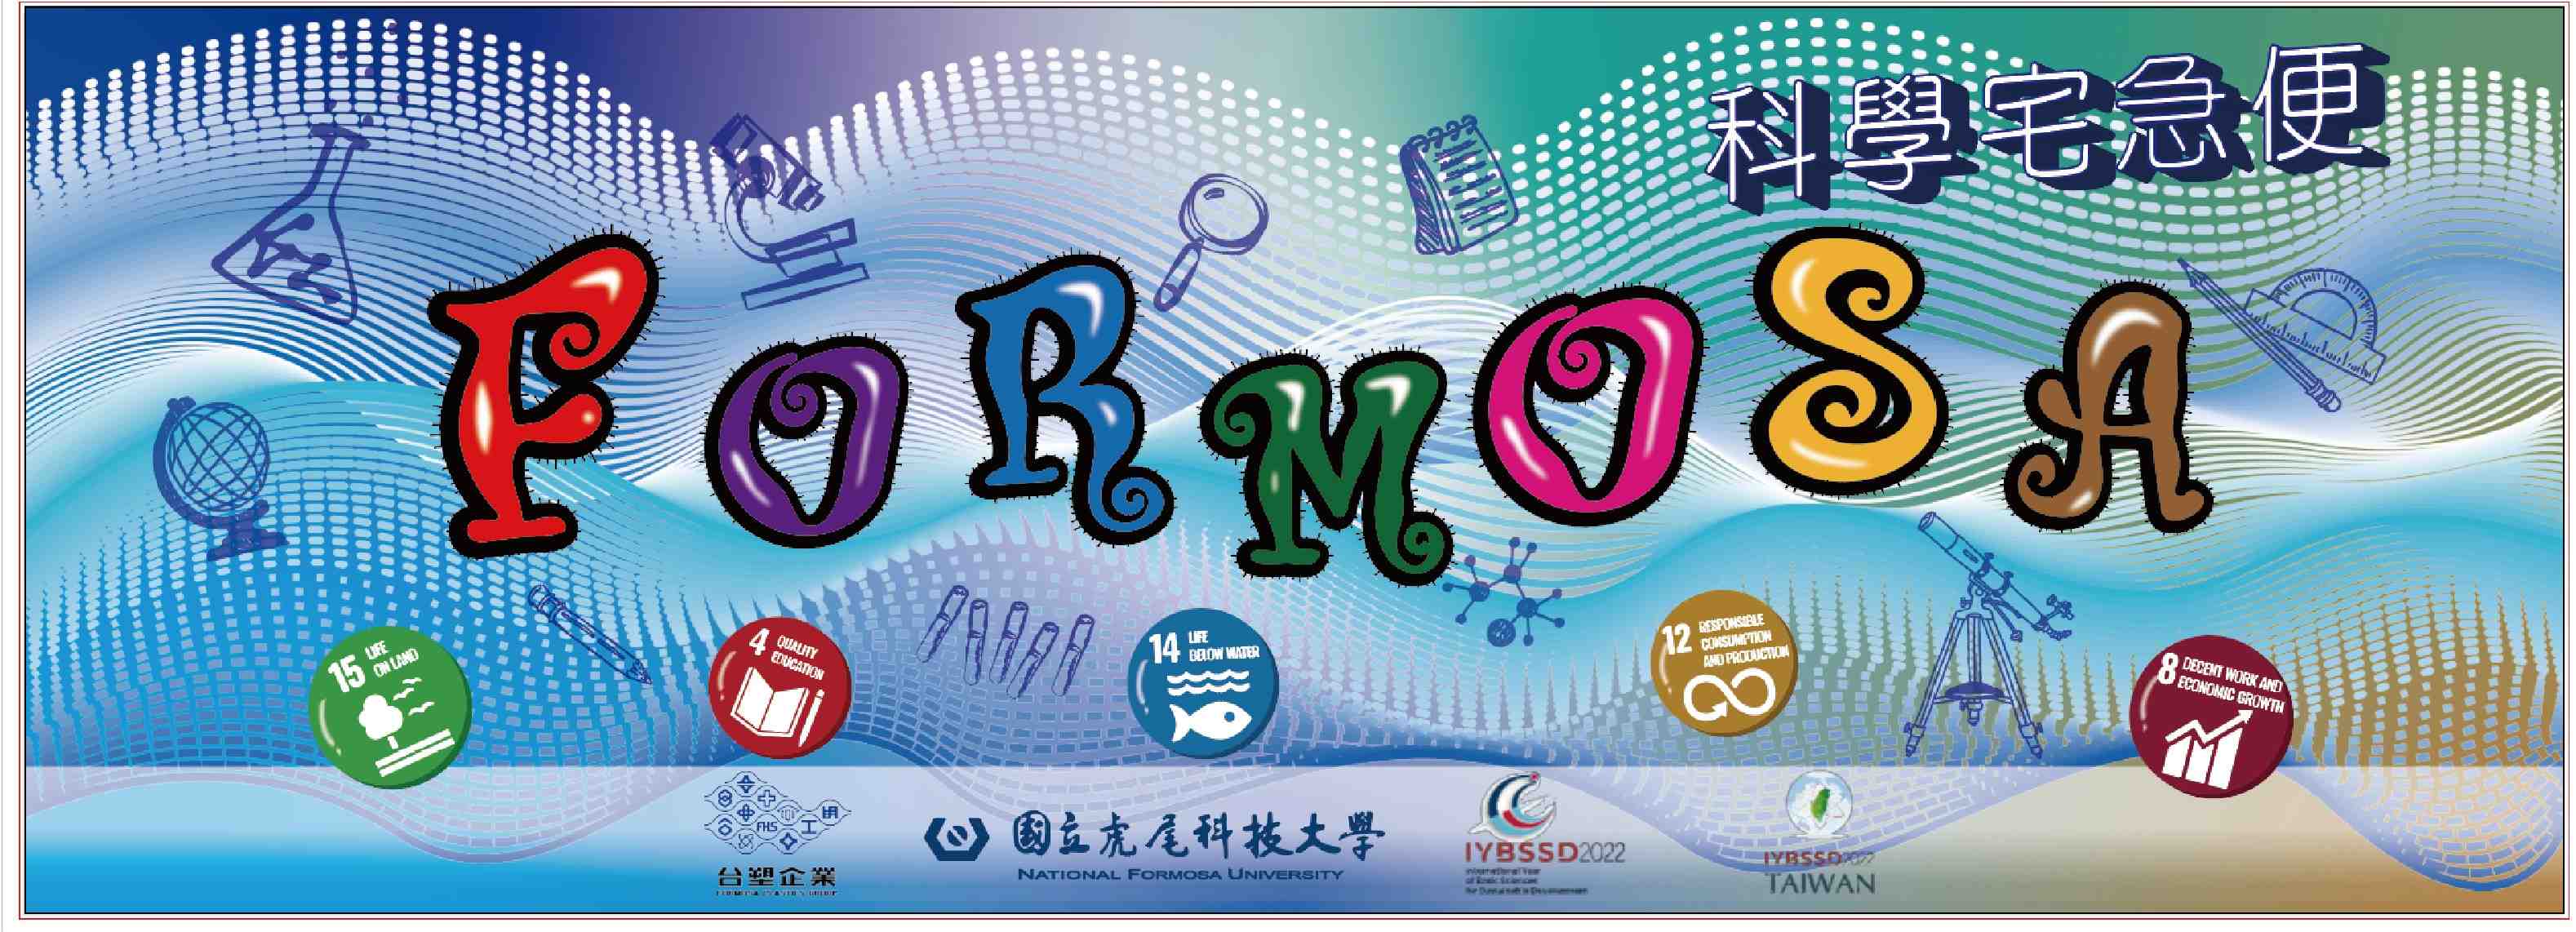 Formosa科學探索營宣傳用圖片/海報